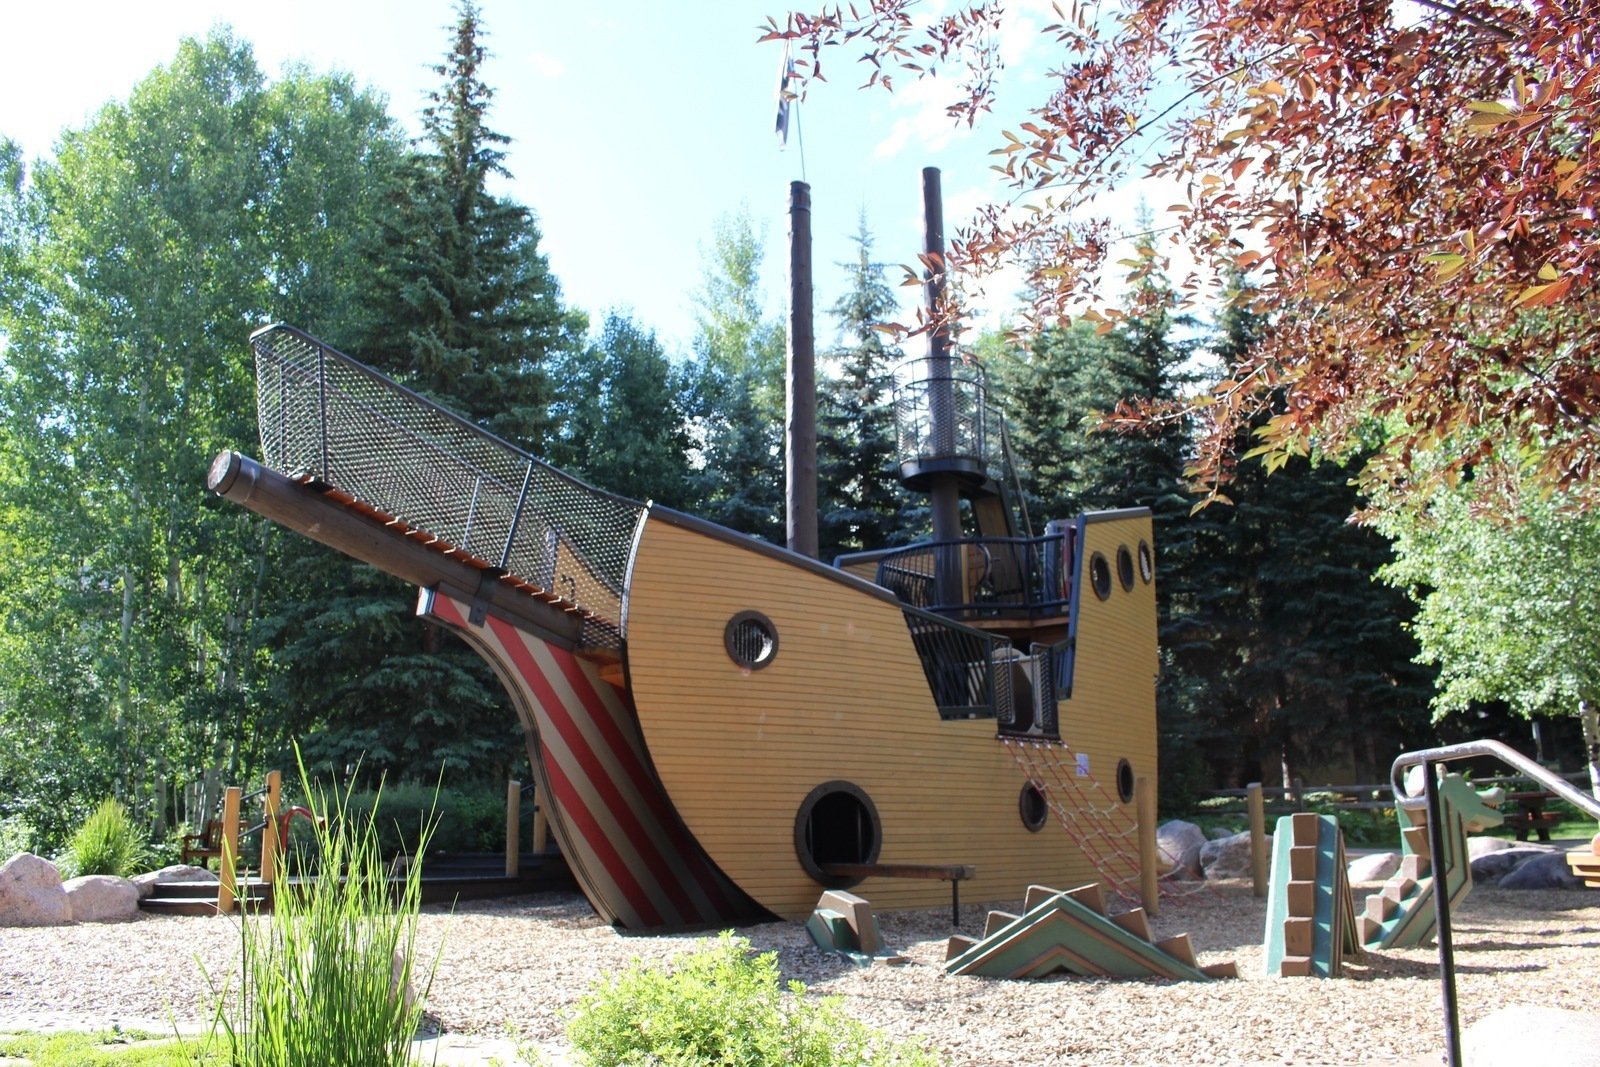 Pirate Ship Park in Vail, Colorado - Kid-friendly Attractions | Trekaroo1600 x 1067